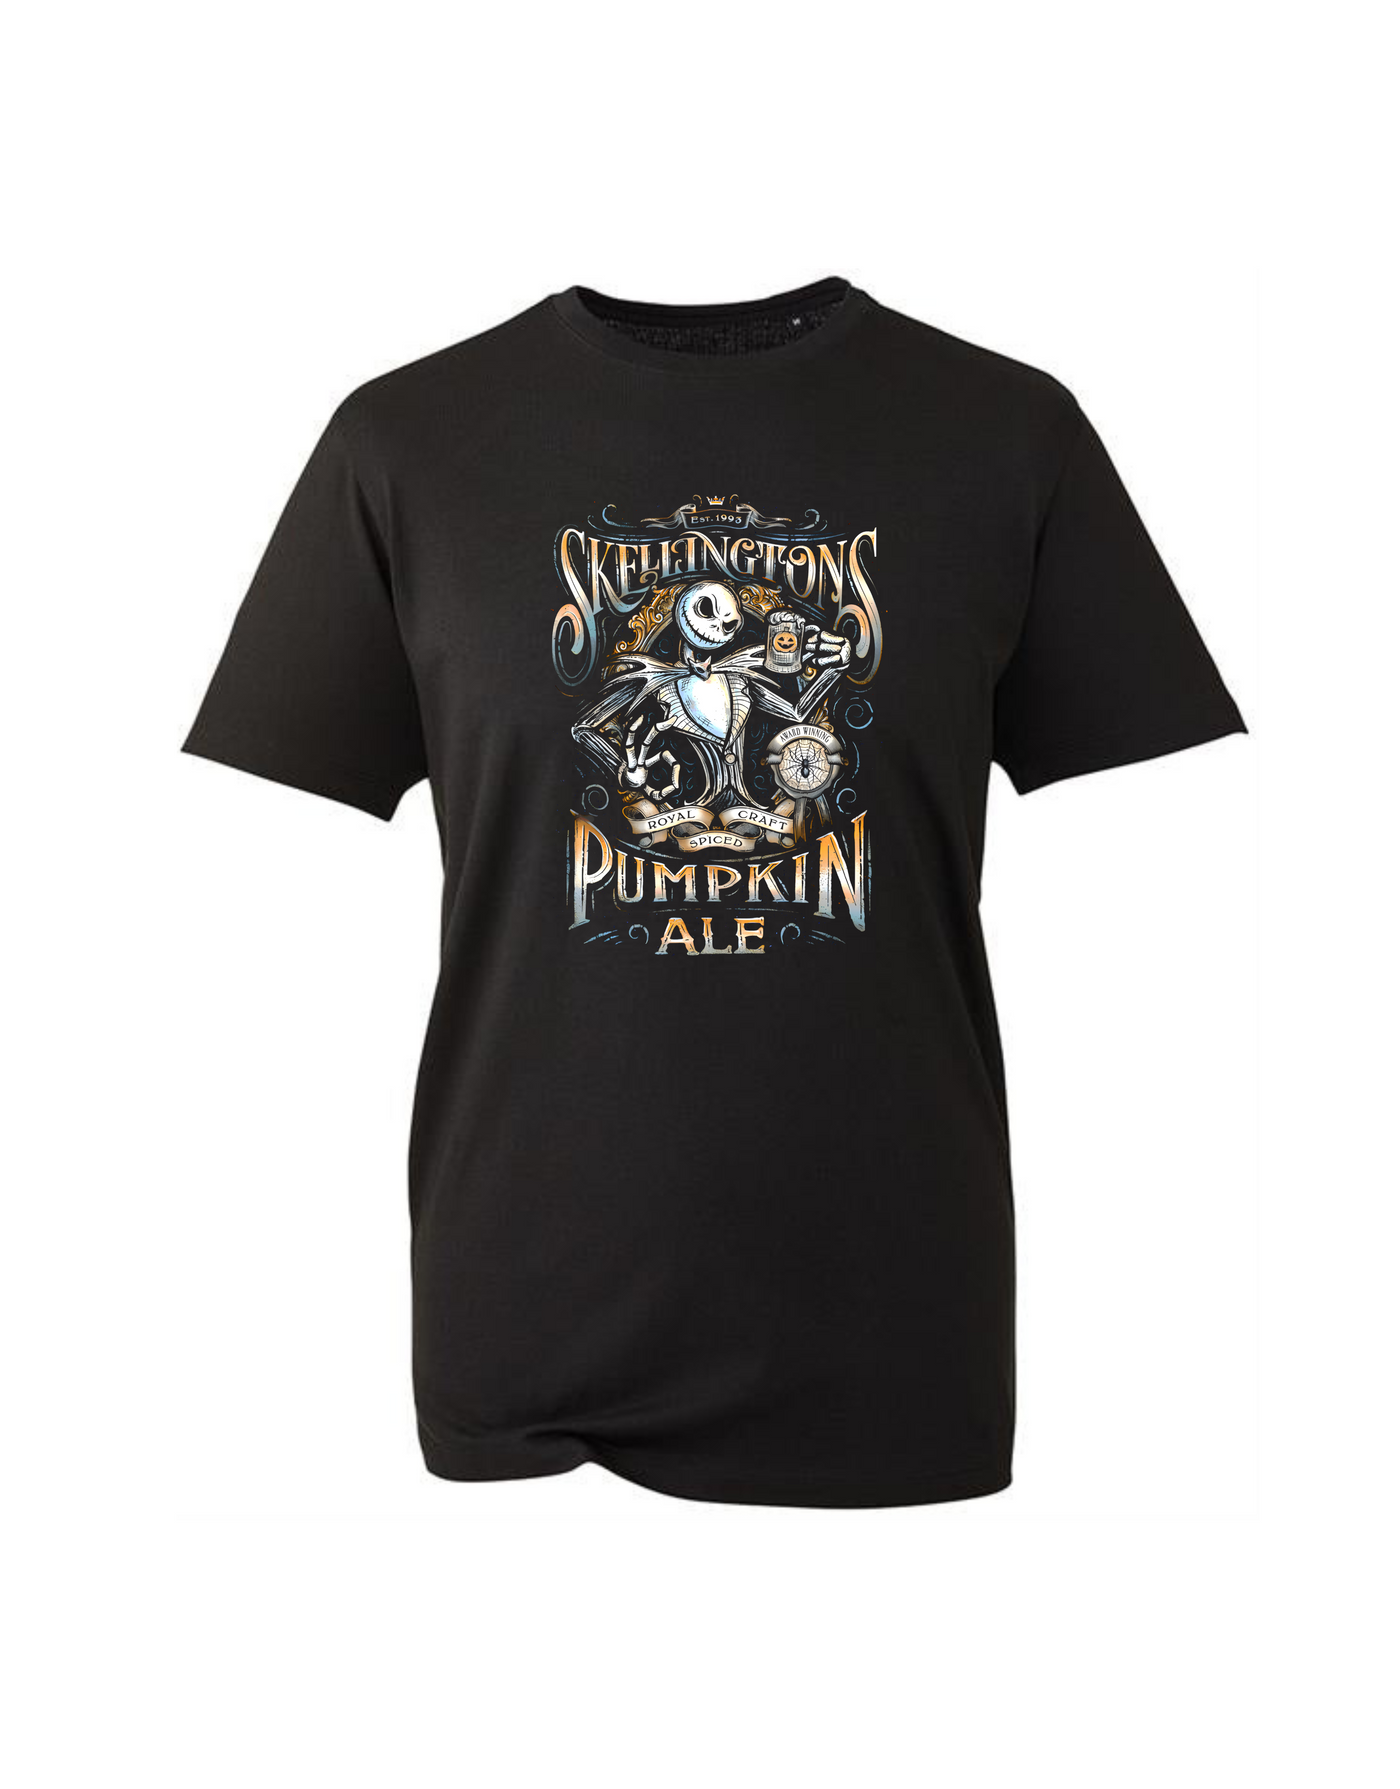 "Skellington's Pumpkin Ale" Unisex Organic T-Shirt